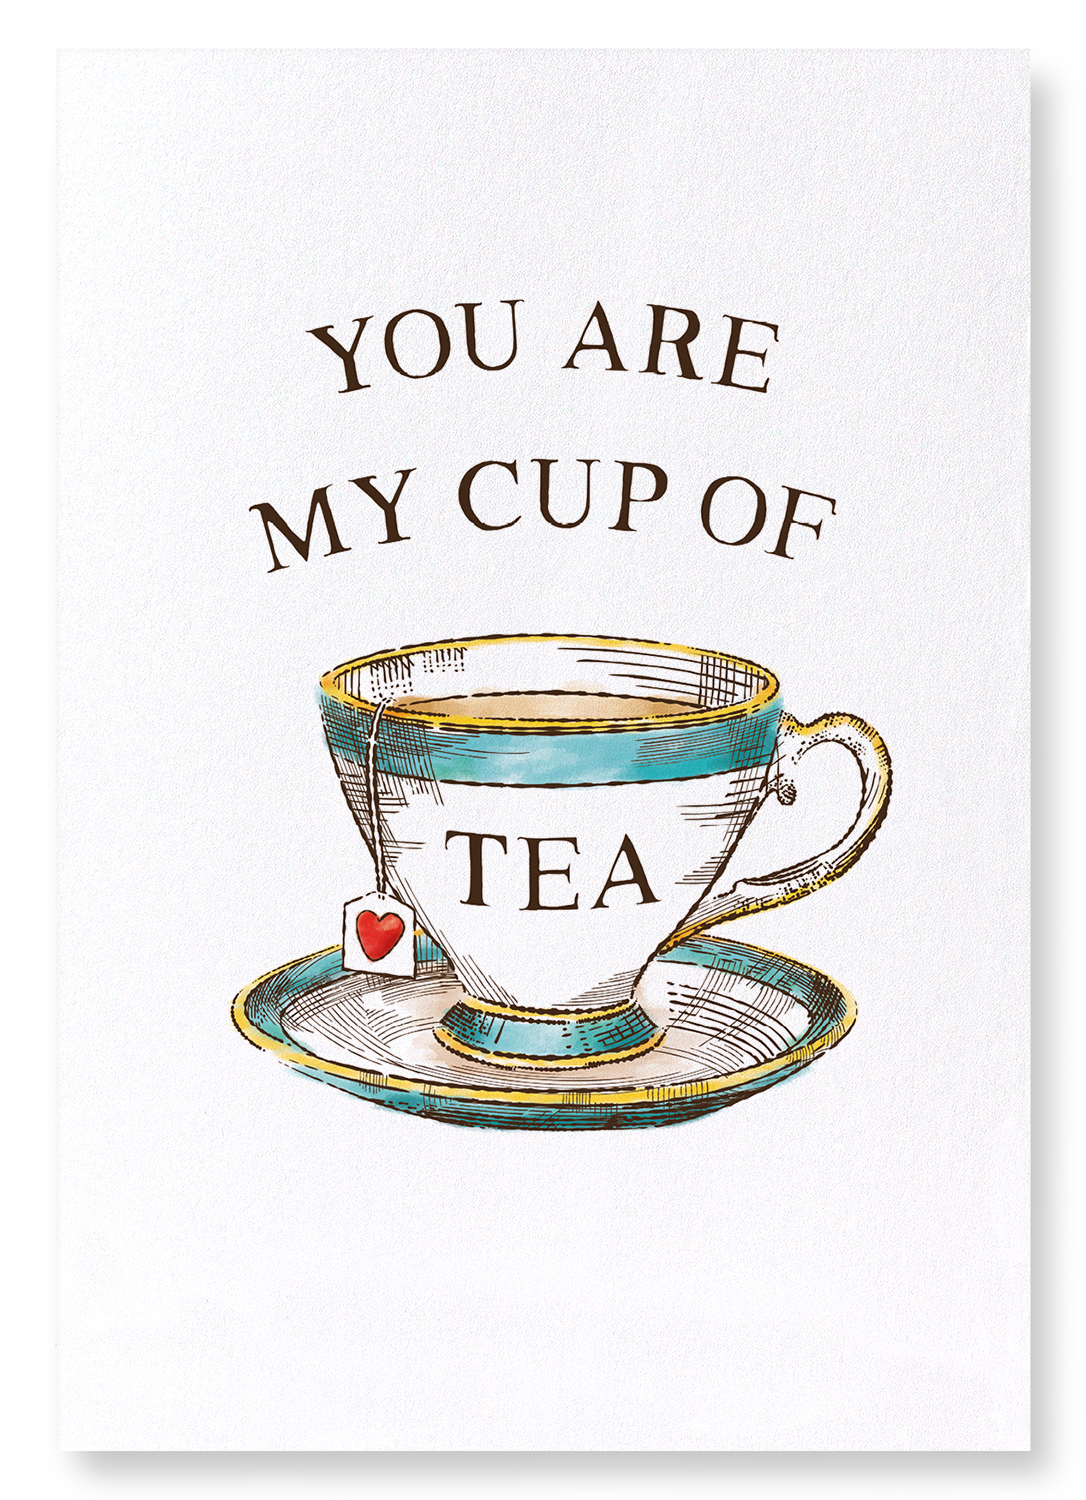 MY CUP OF TEA: Victorian Art Print